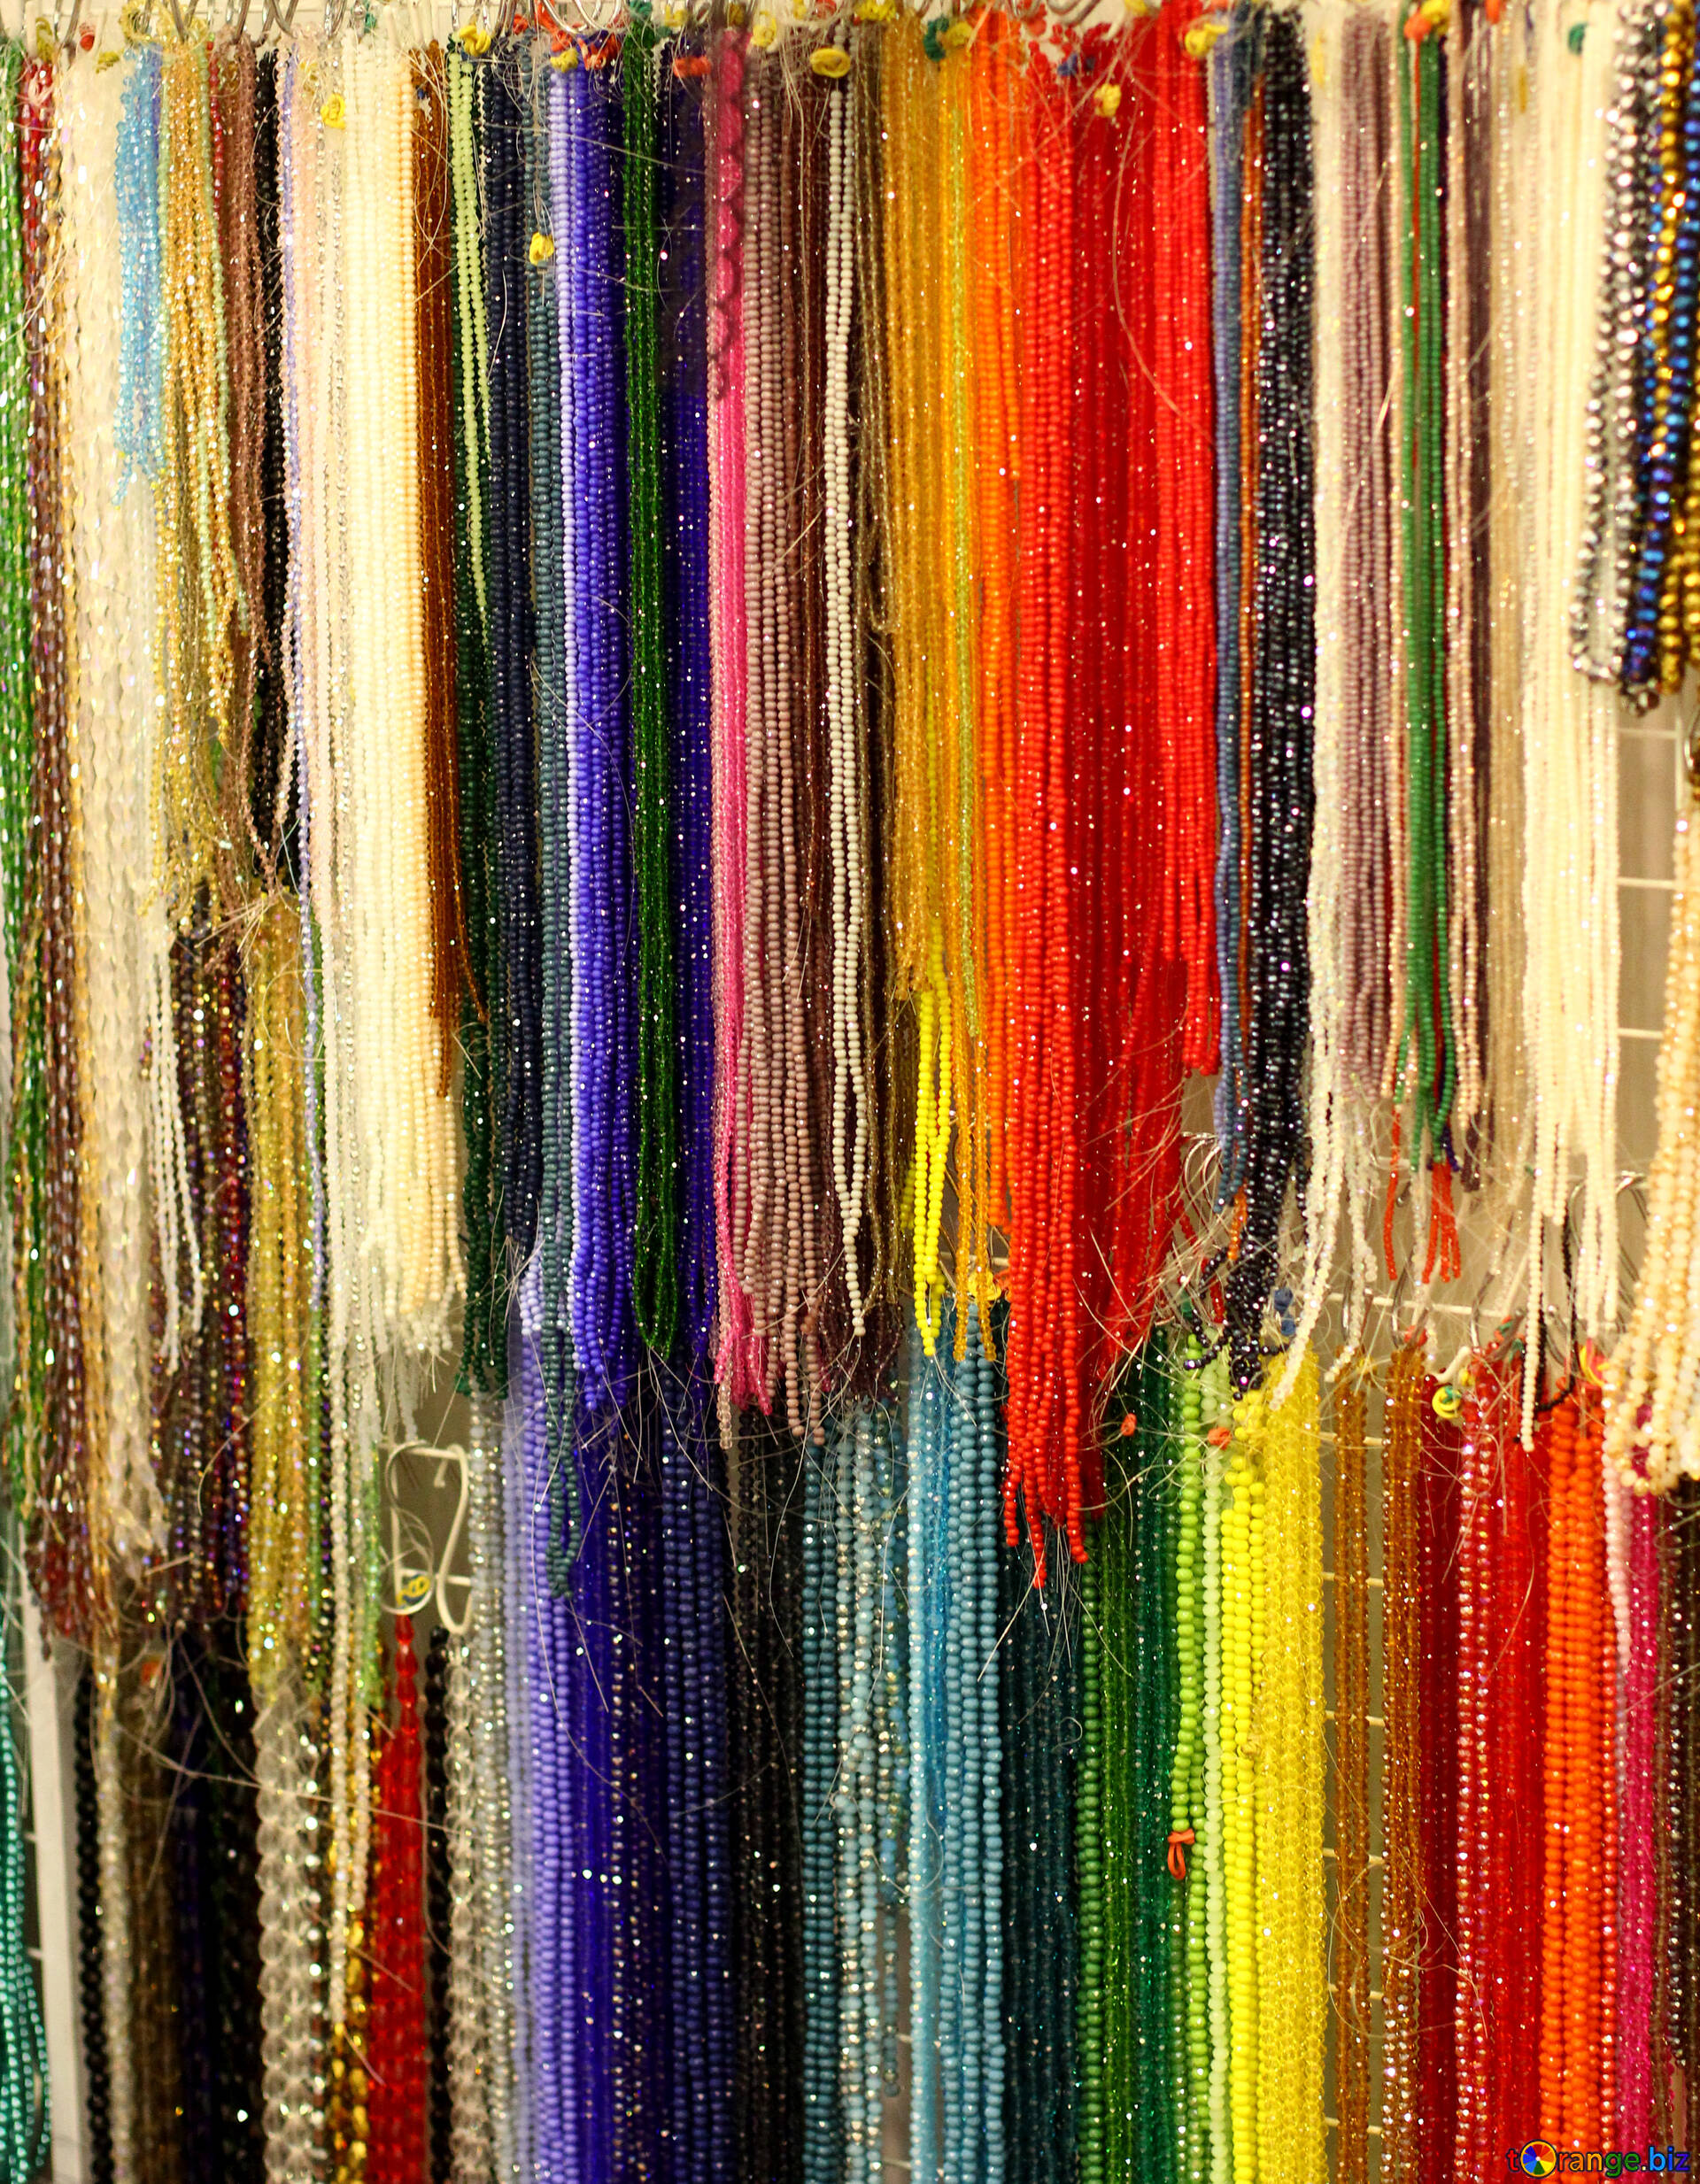 Multi-colored skeins of yarn free image - № 52698